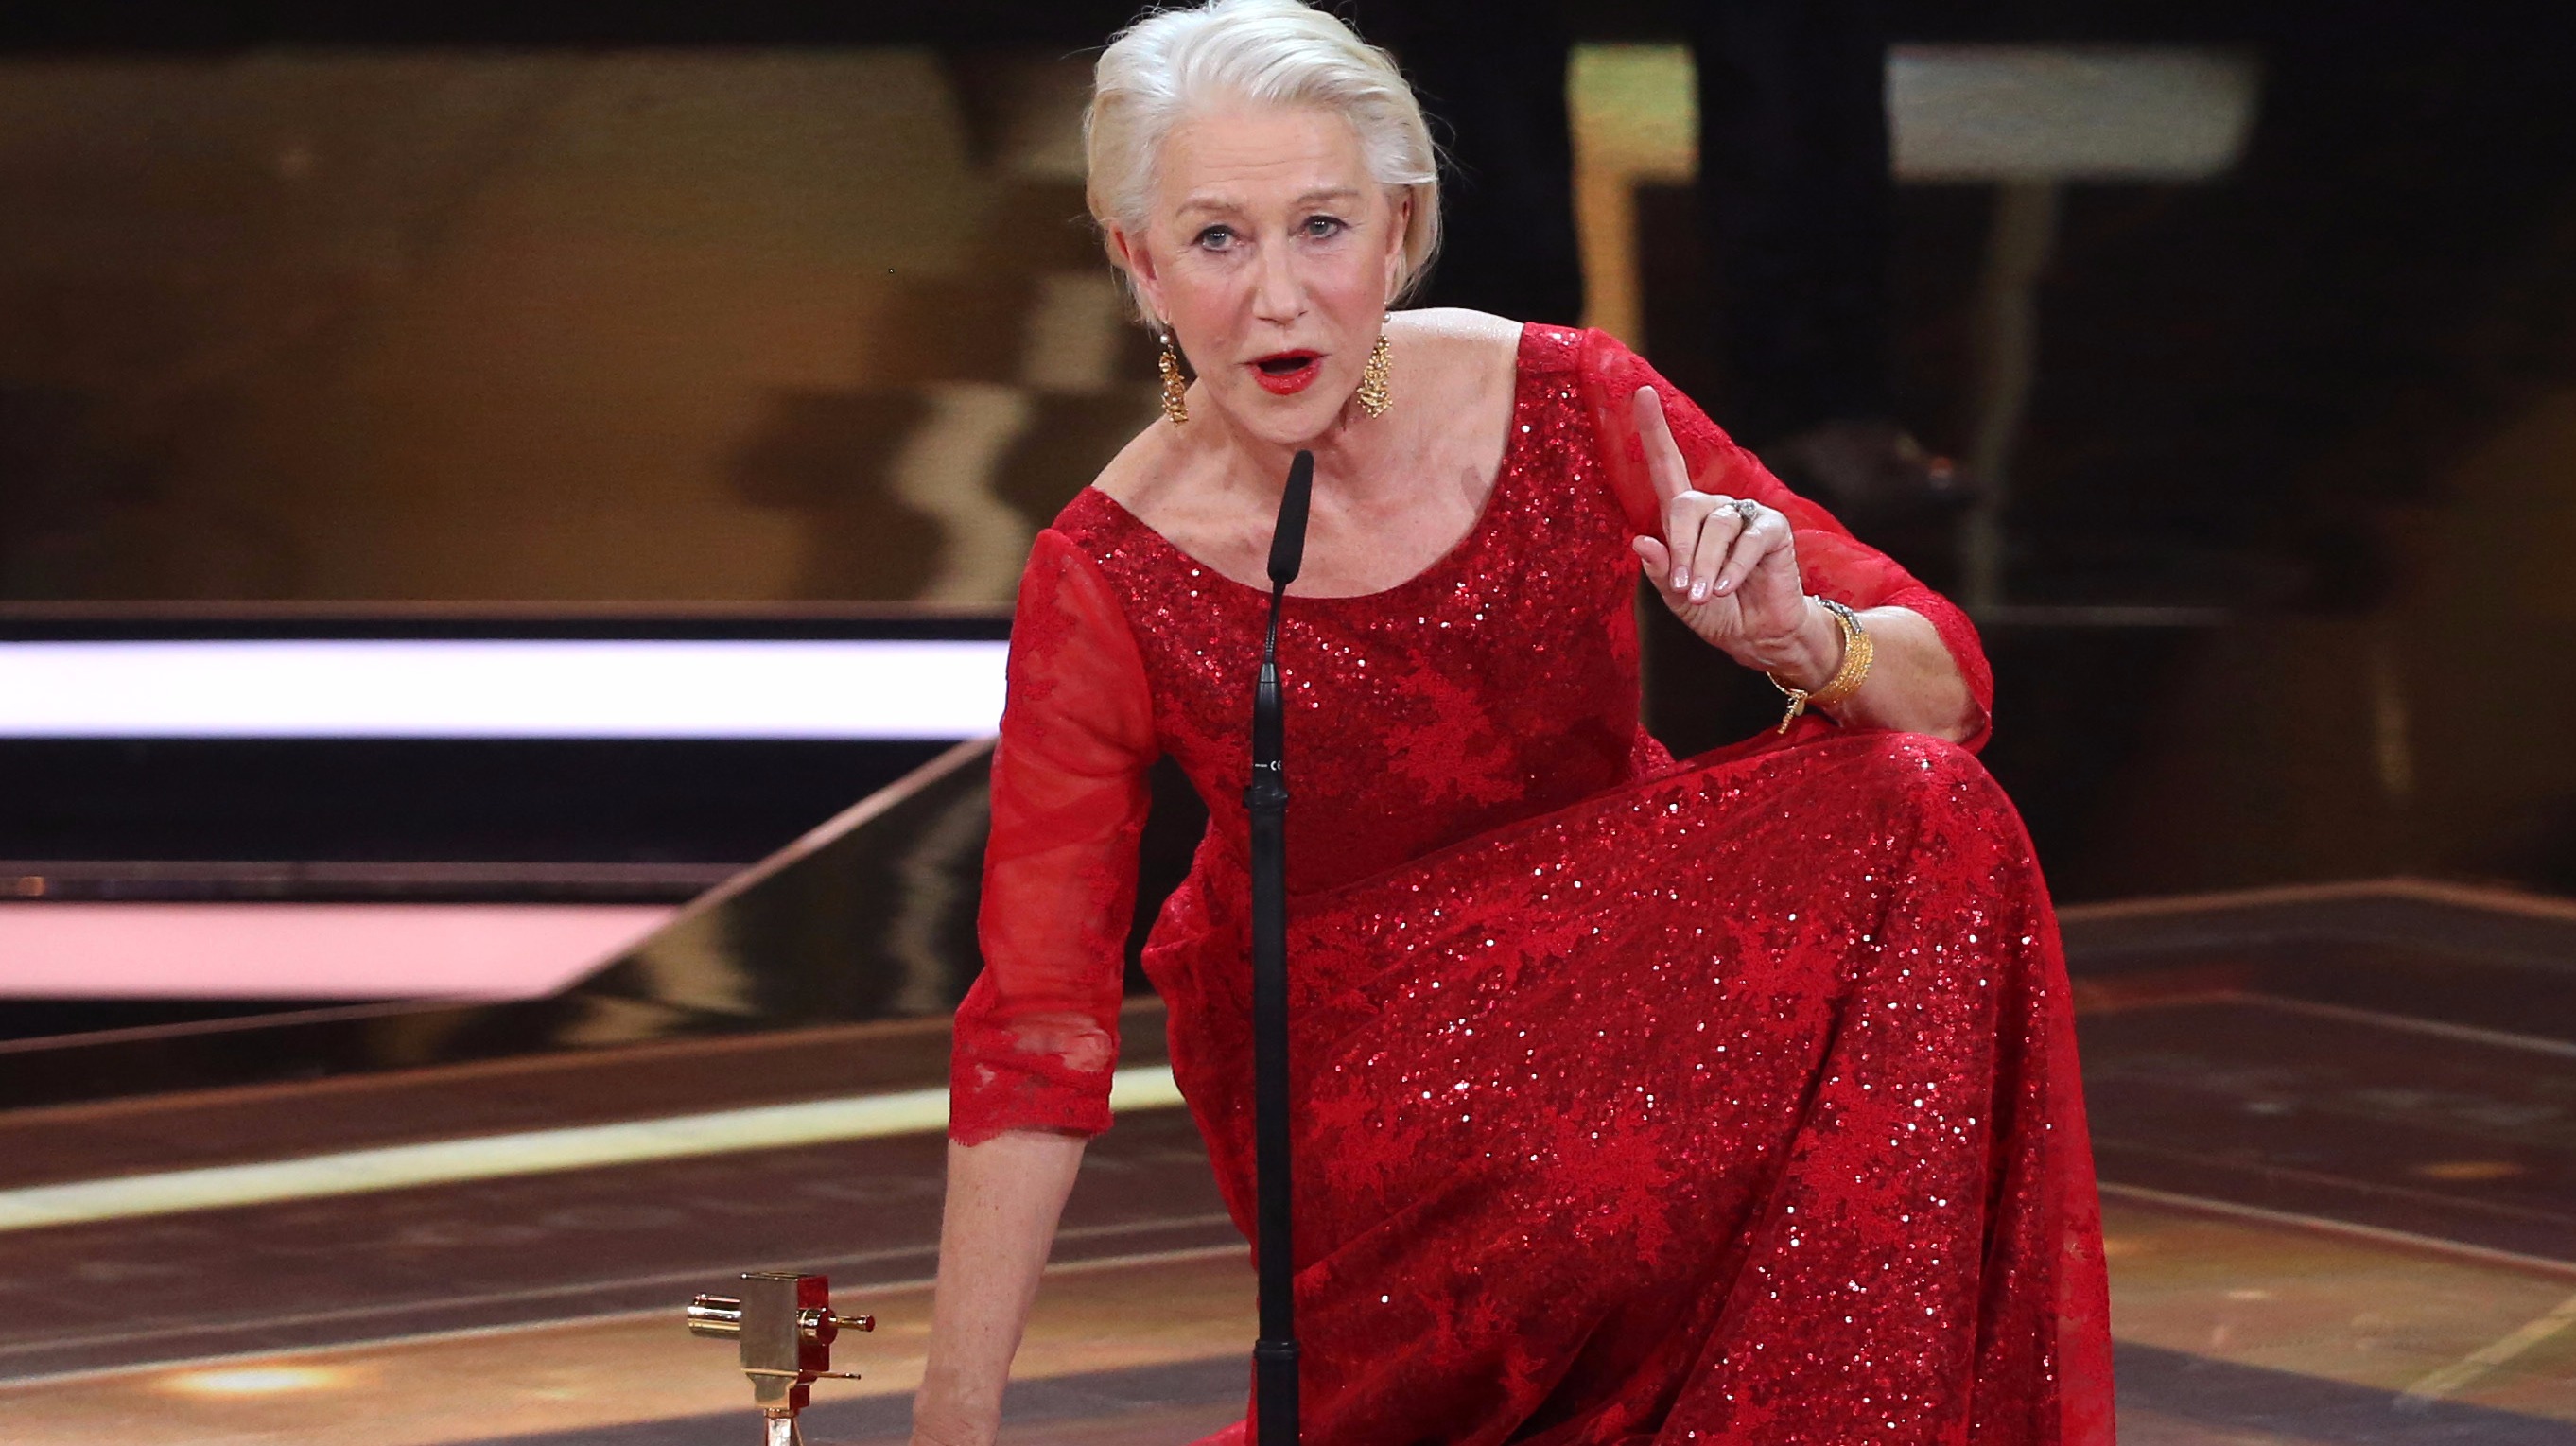 Helen Mirren improvises during awards acceptance speech as mic slips to